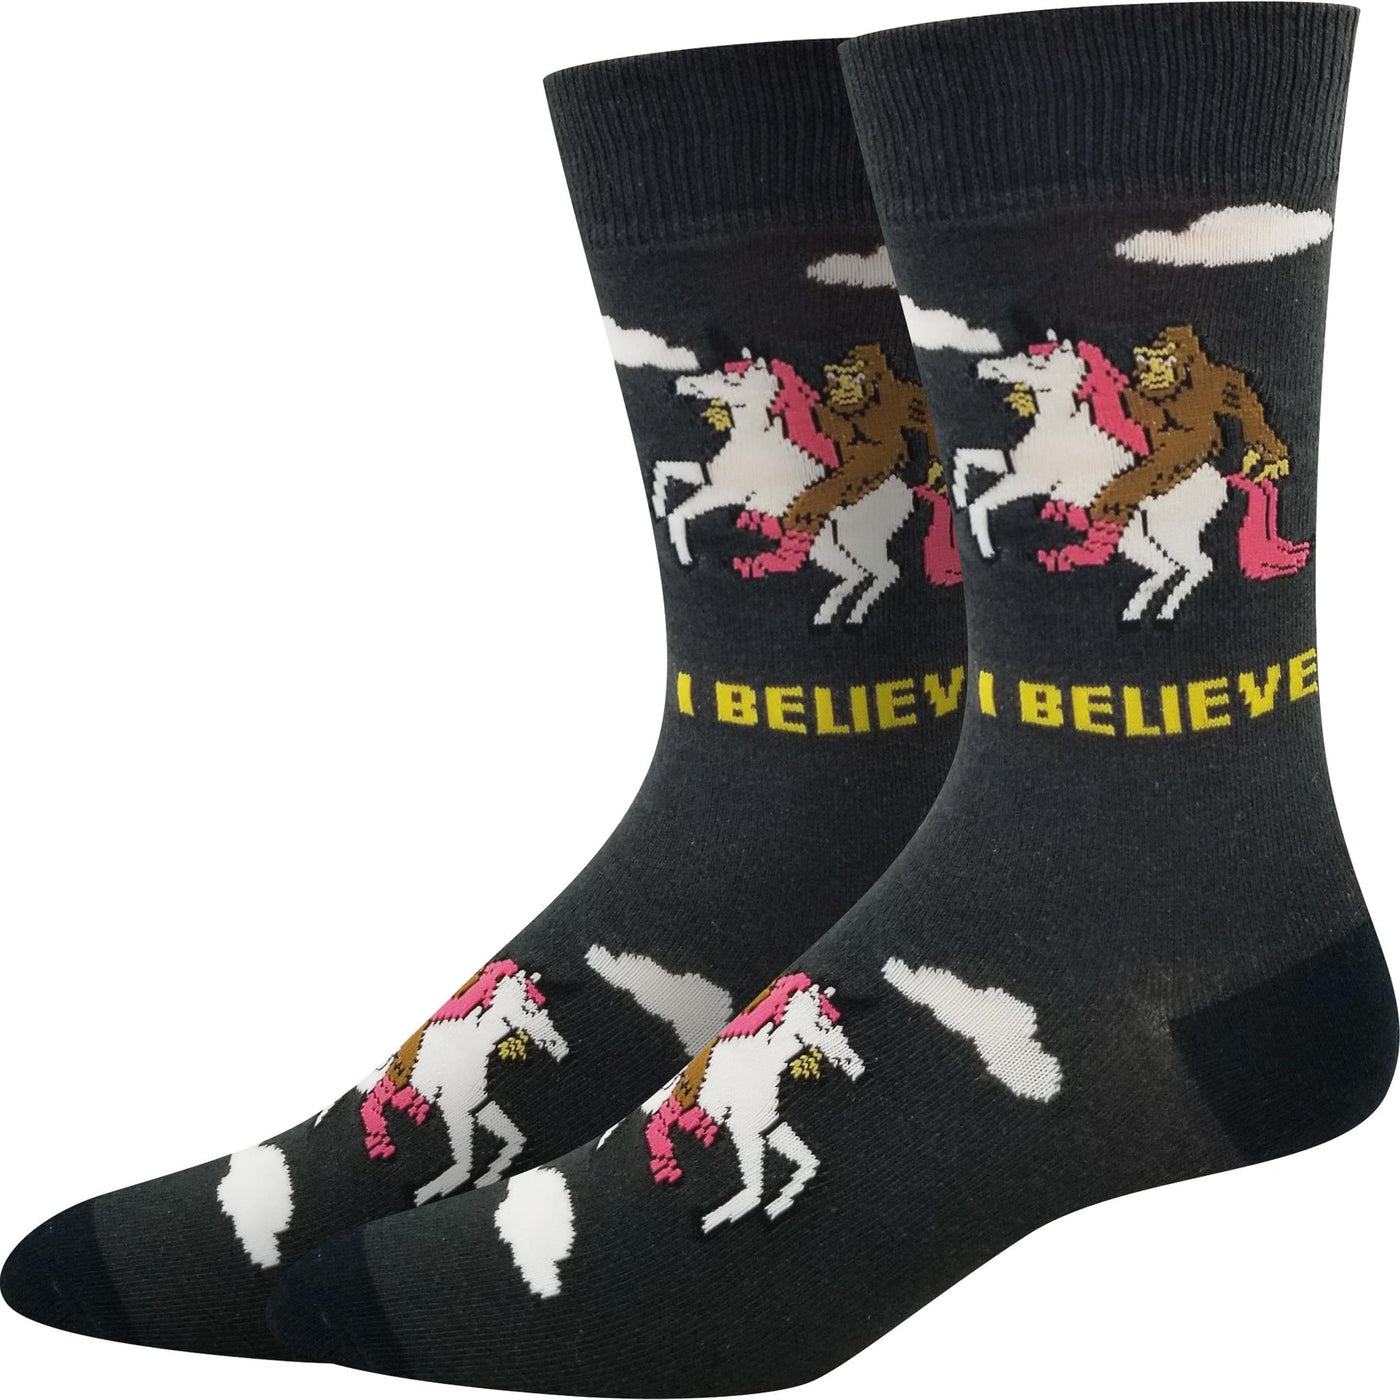 Bigfoot Sock Co. - I Believe Bigfoot Crew Socks | Men's / Women's - Knock Your Socks Off